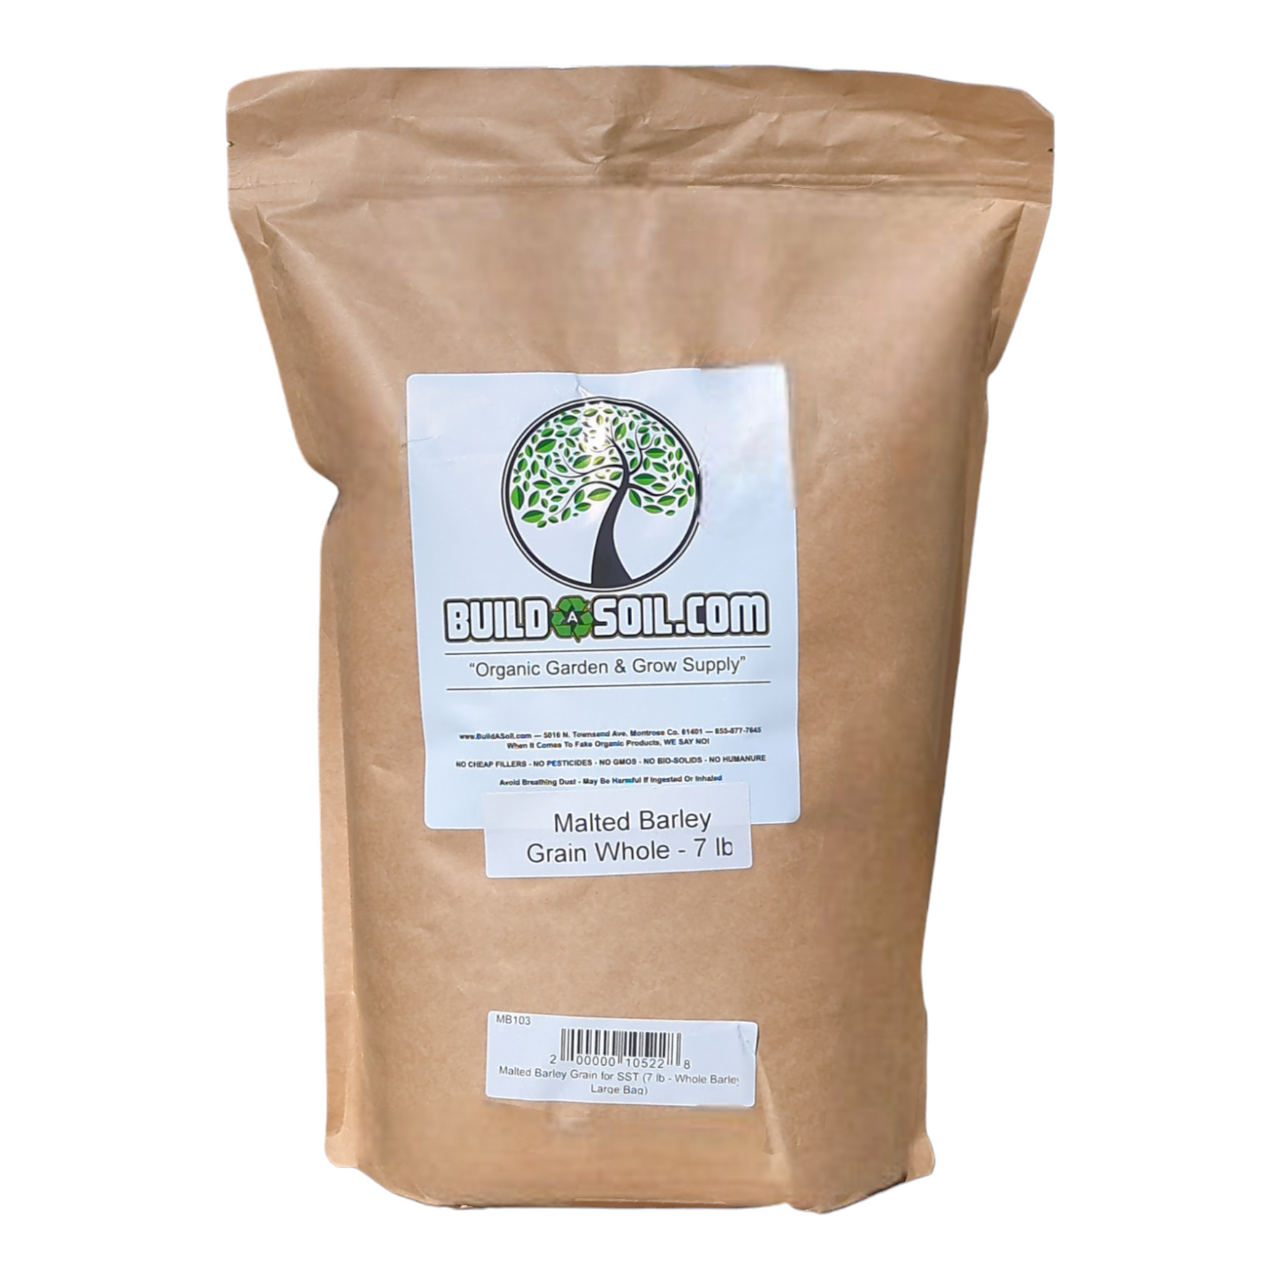 Malted Barley Grain for SST - Certified Organic